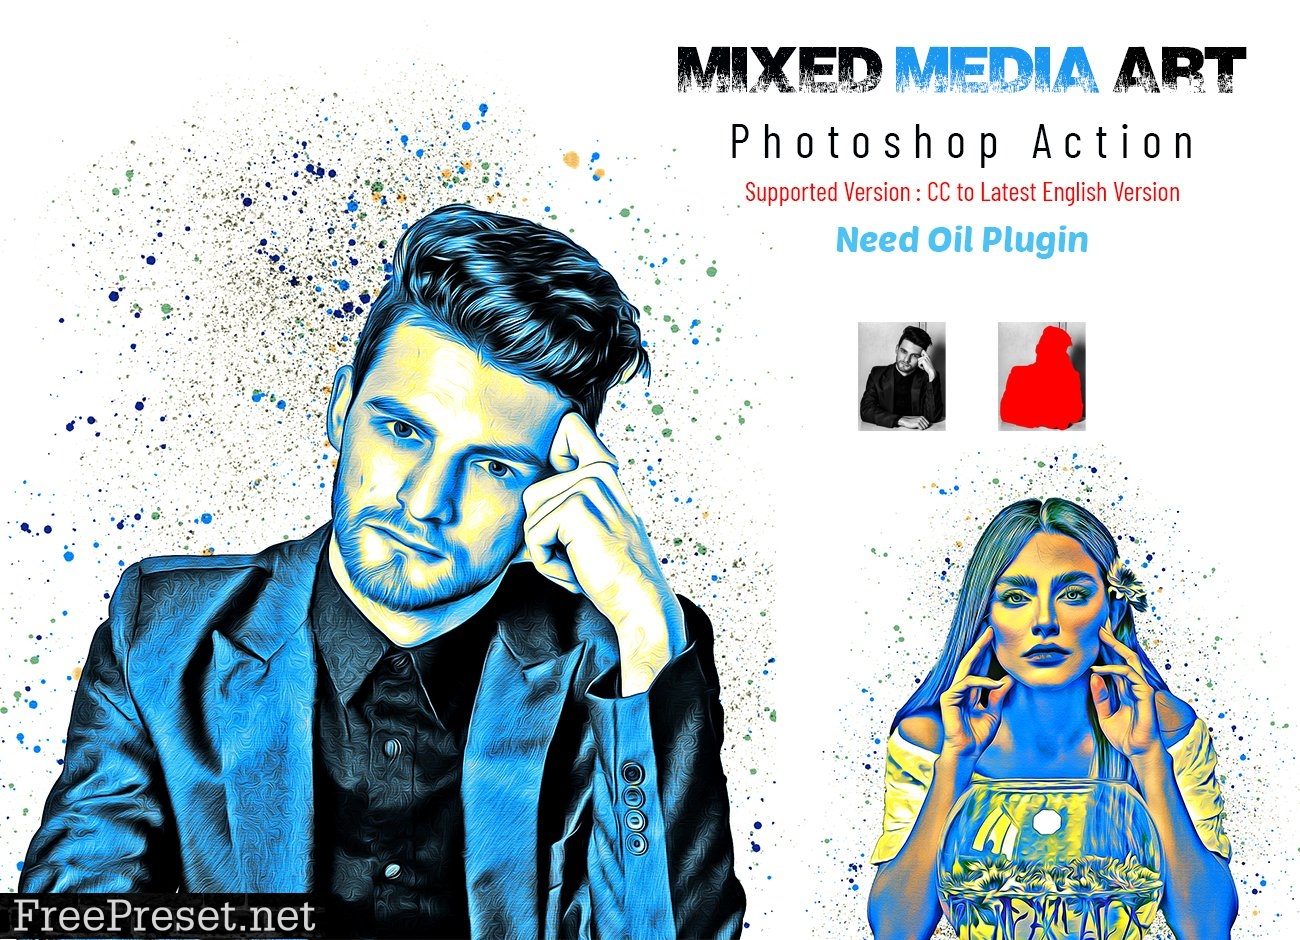 Mixed Media Art Photoshop Action 7053814